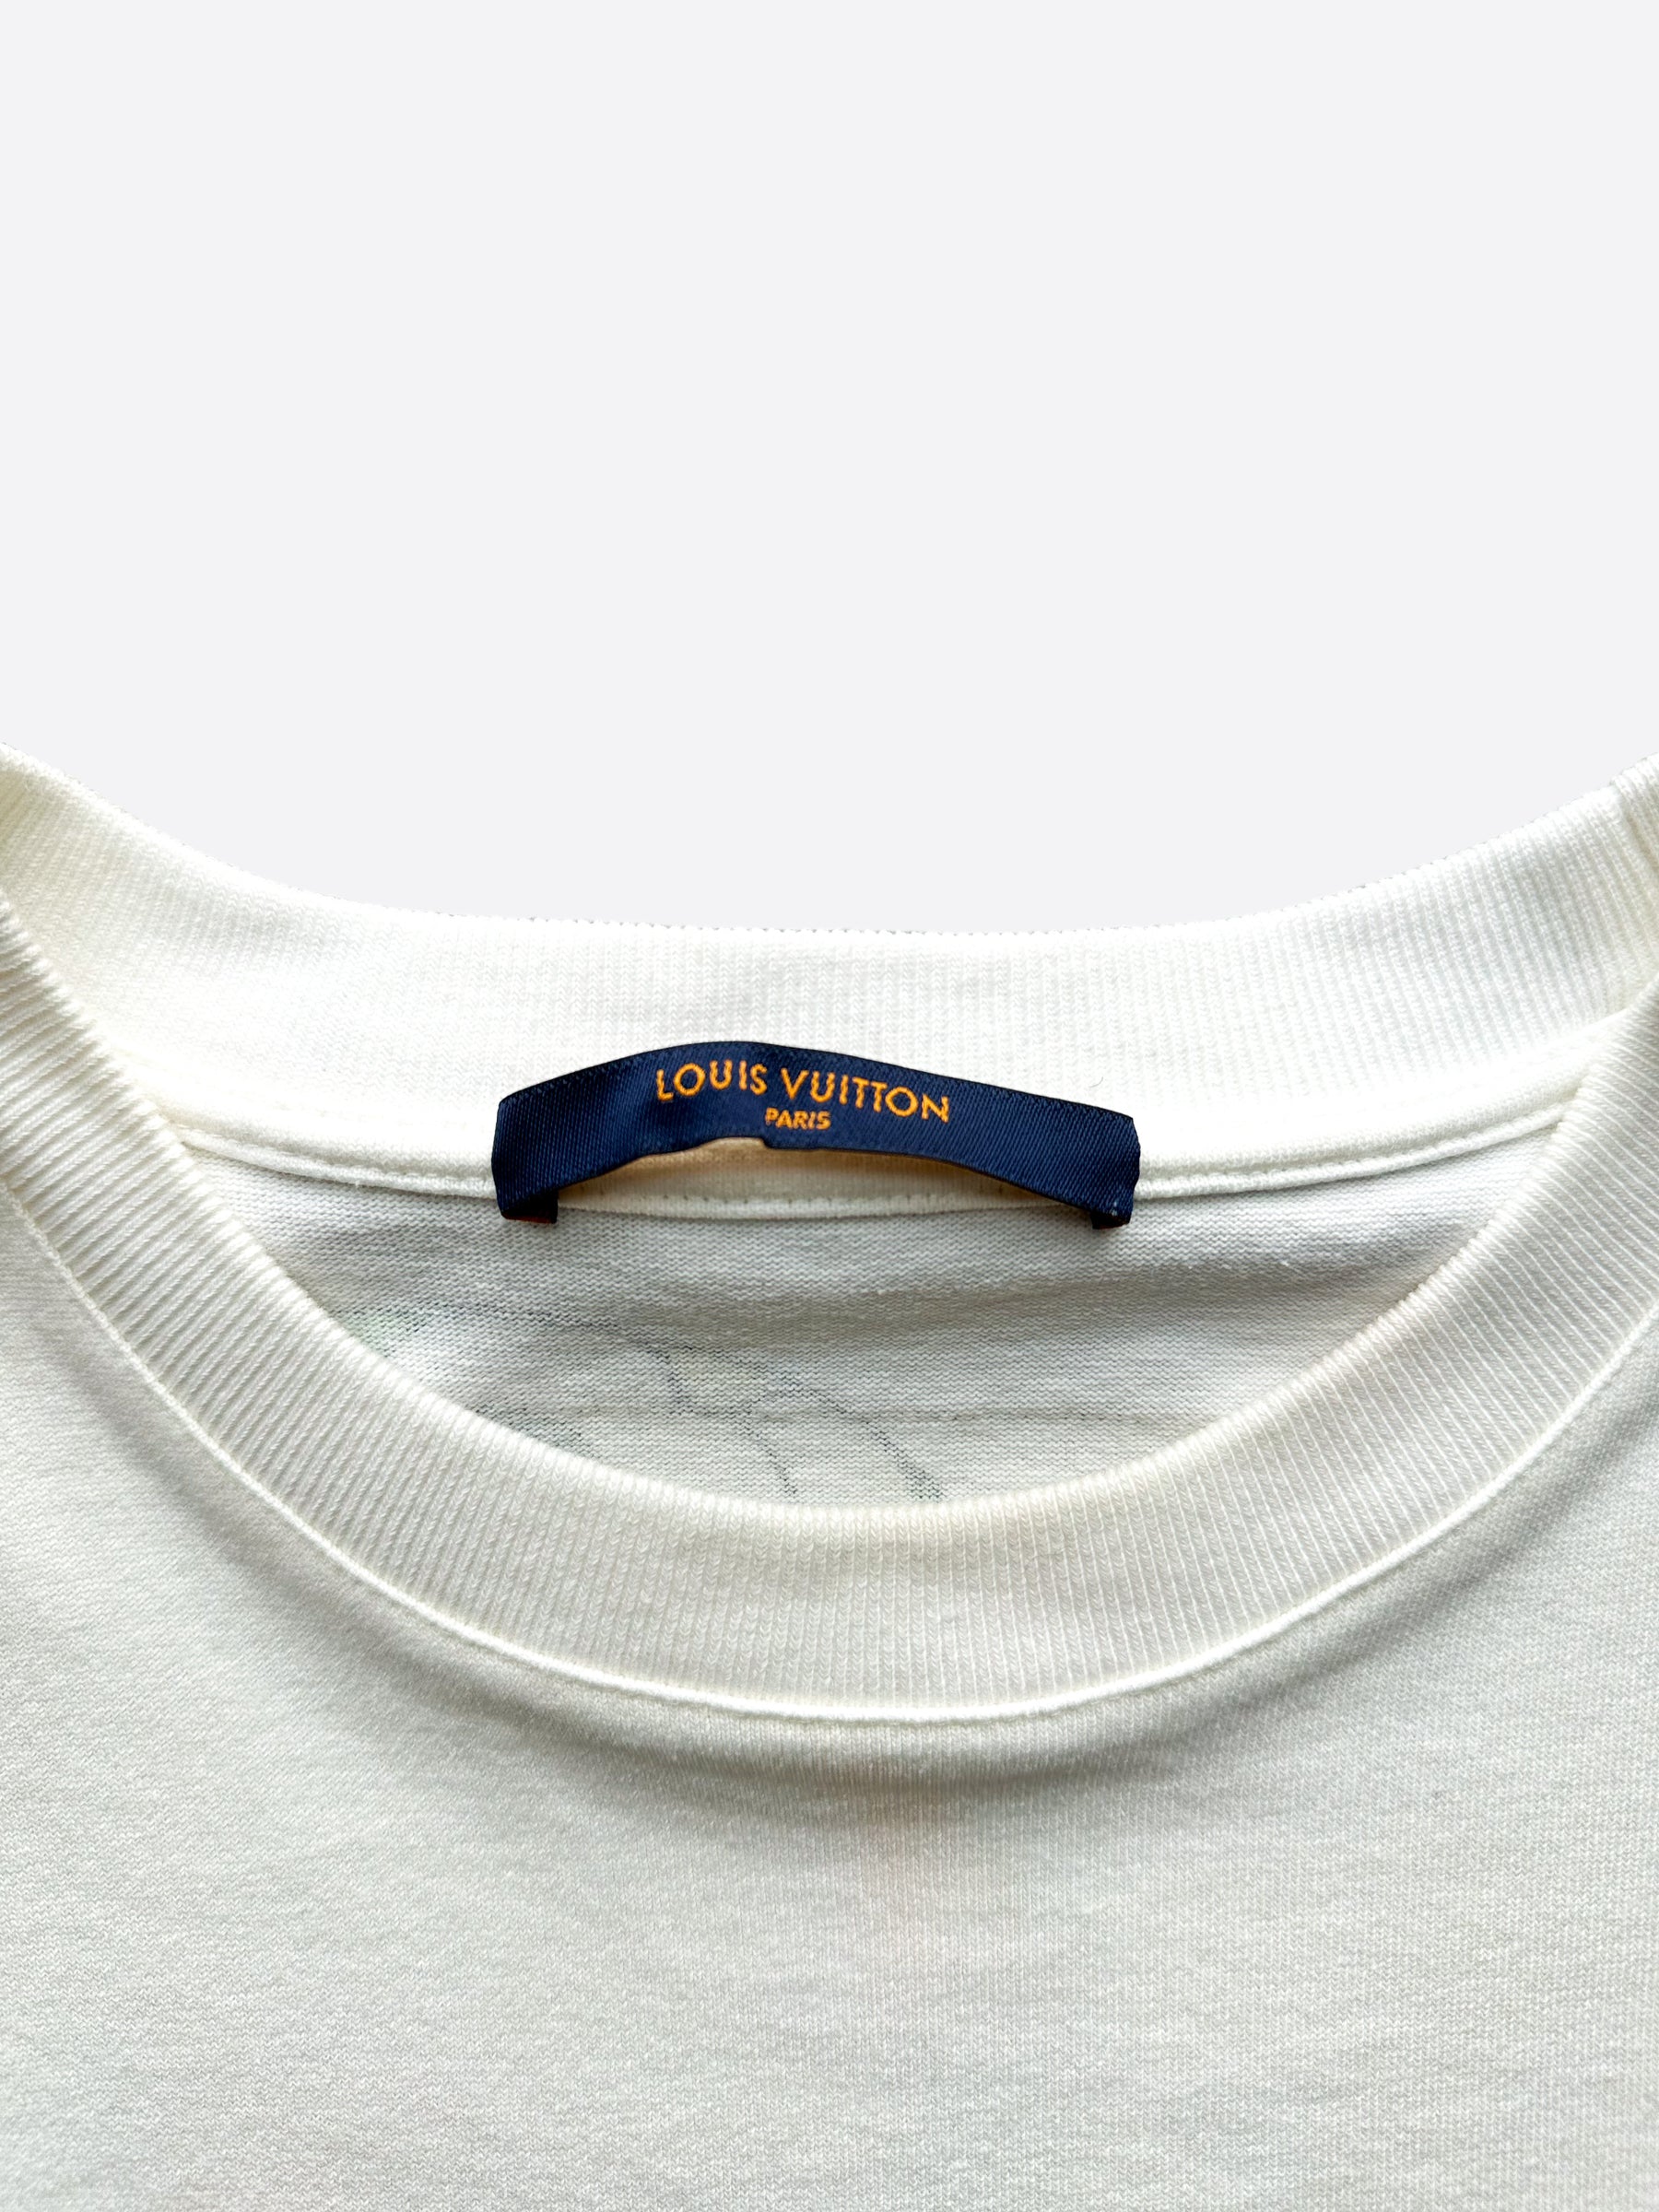 Louis Vuitton White Burning House T-Shirt